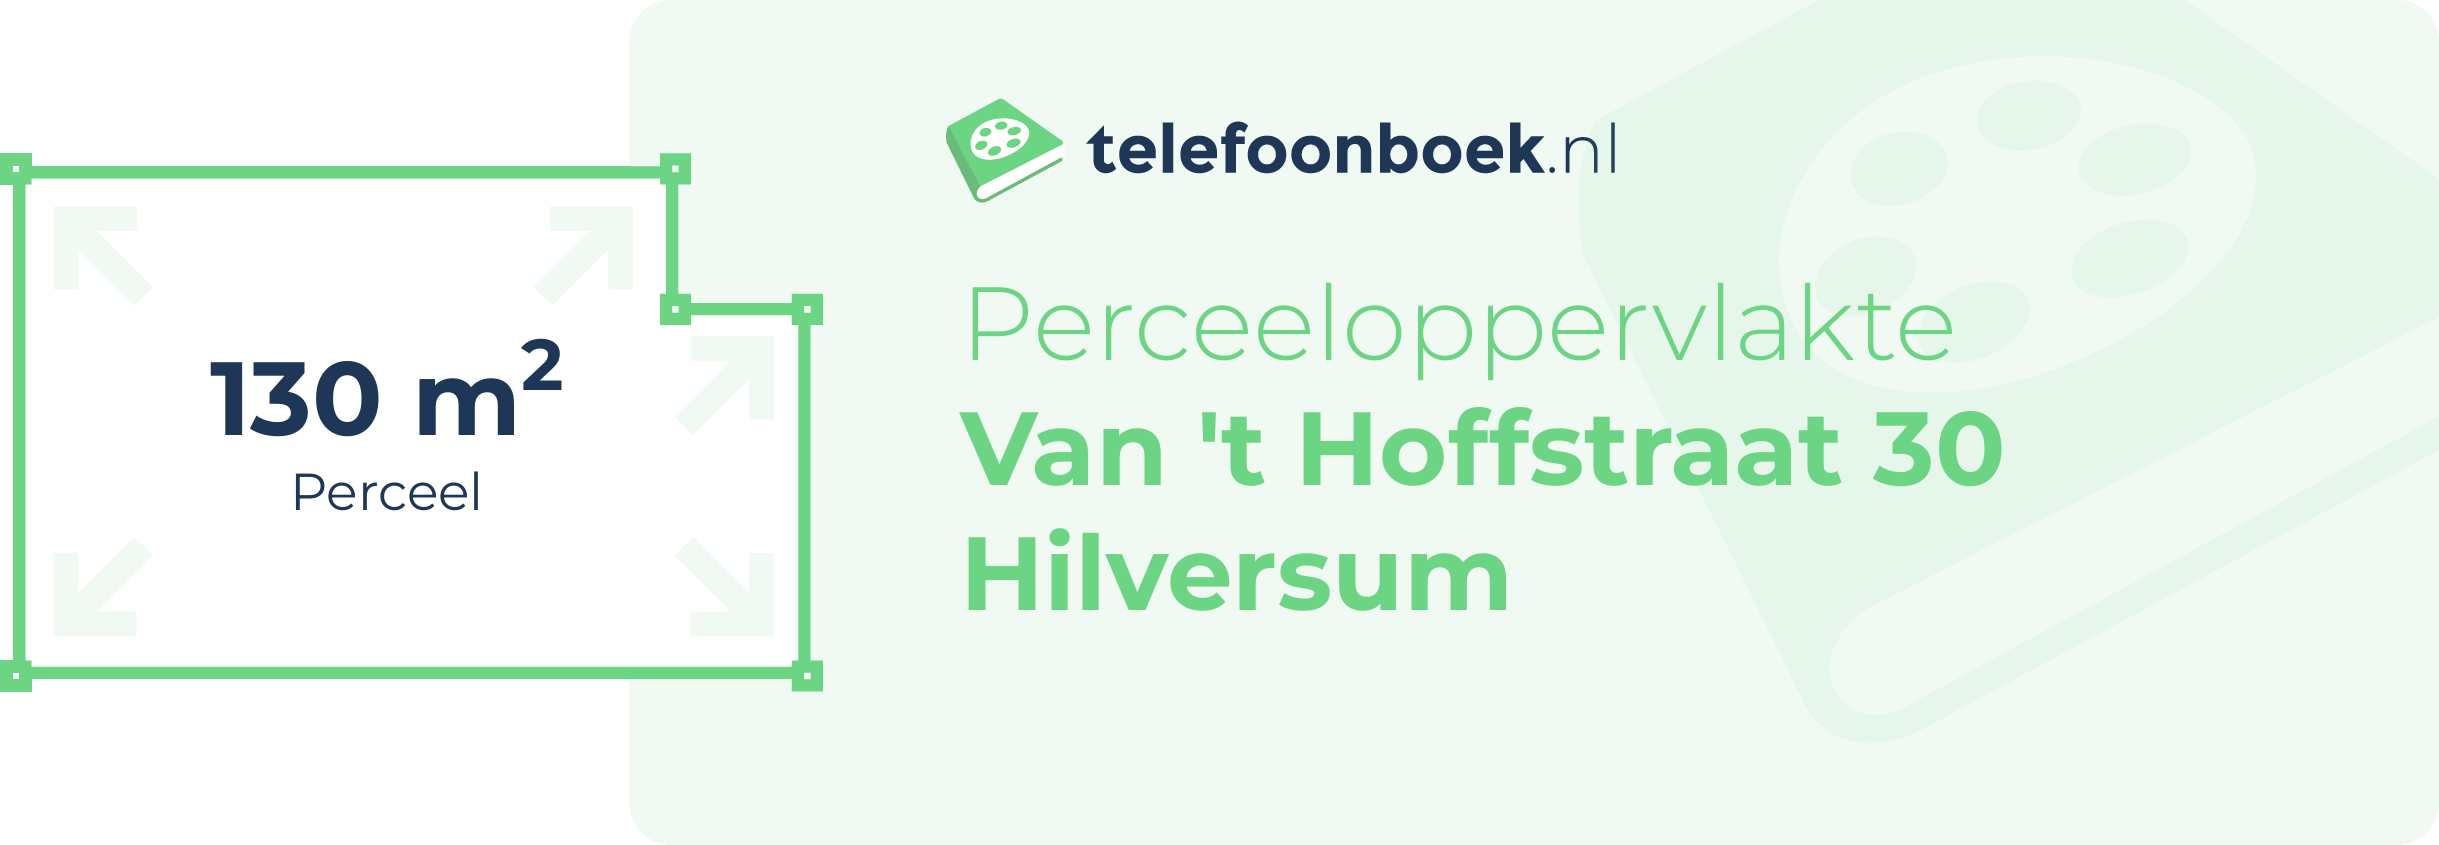 Perceeloppervlakte Van 't Hoffstraat 30 Hilversum